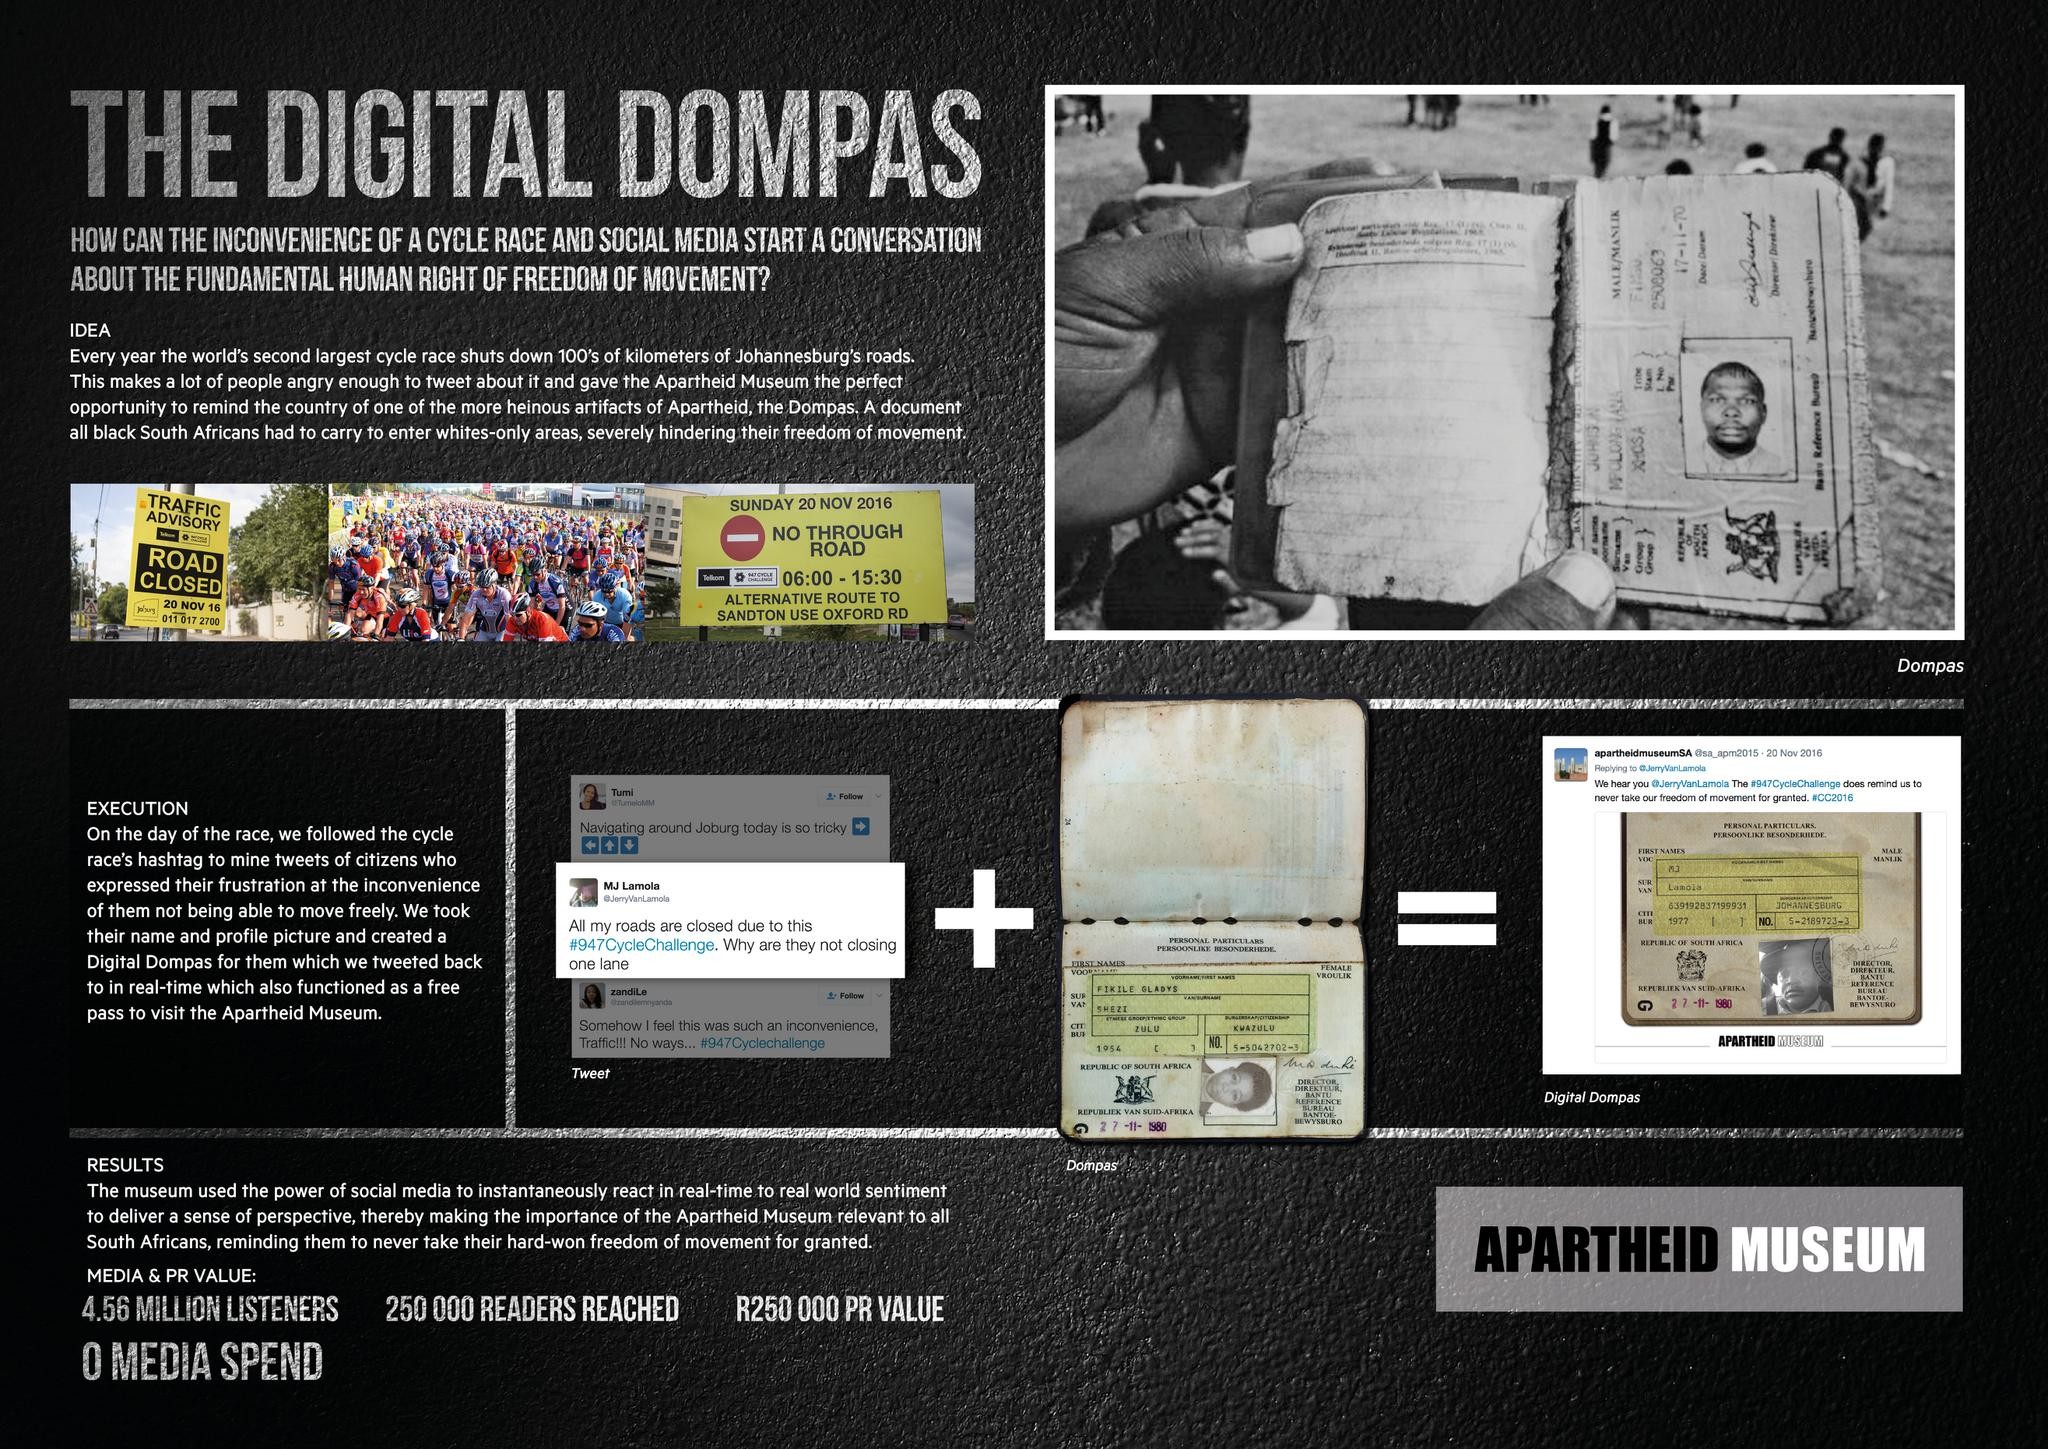 The Digital Dompas